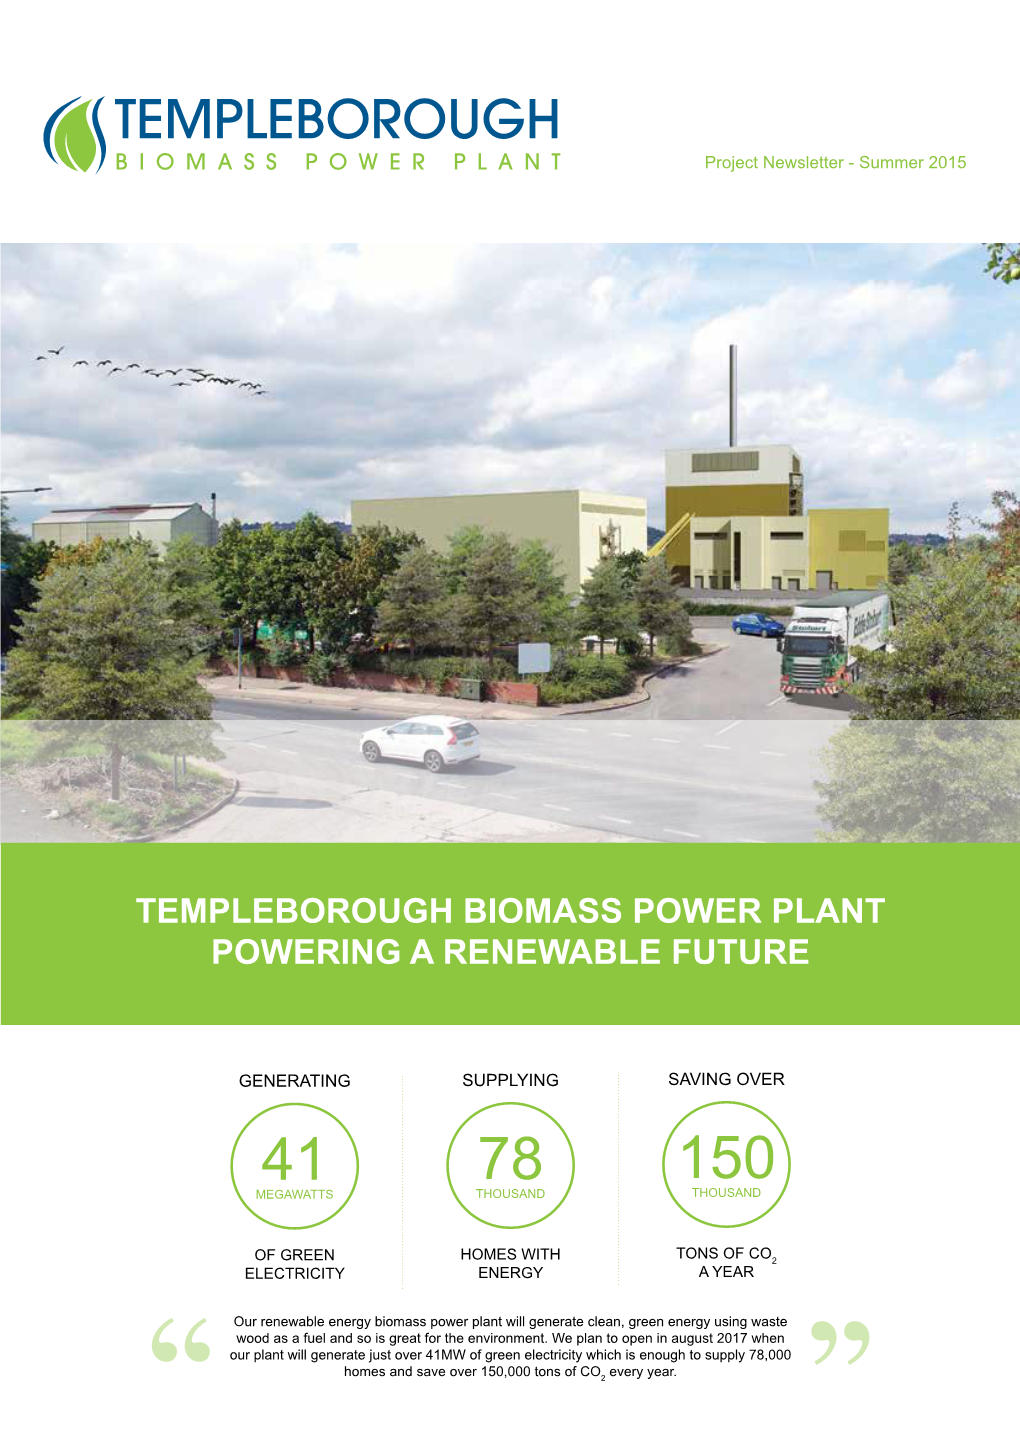 Templeborough Biomass Power Plant Powering a Renewable Future